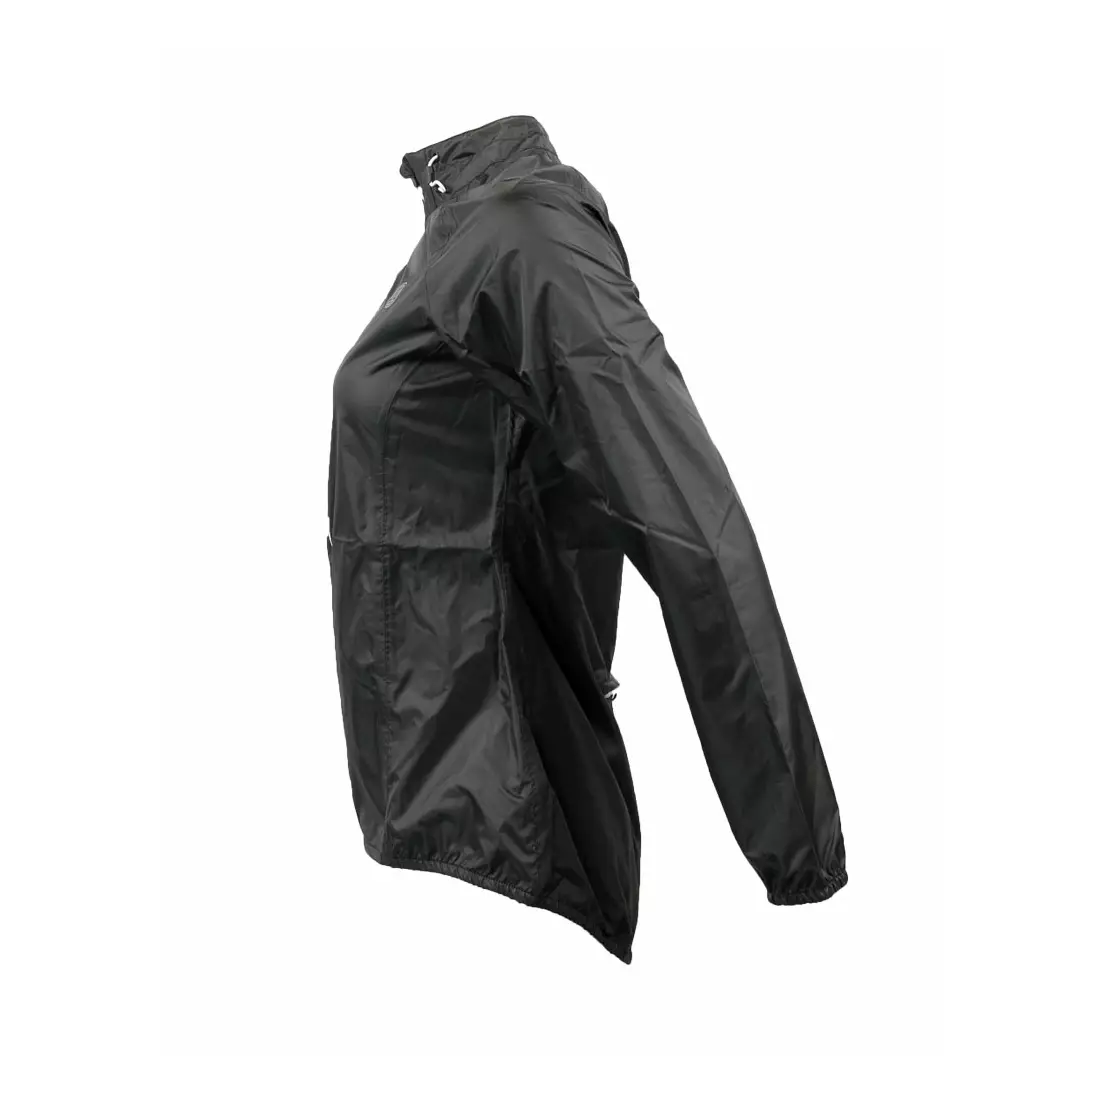 DARE2B Evident women's cycling rain jacket DWW096-800, color: black